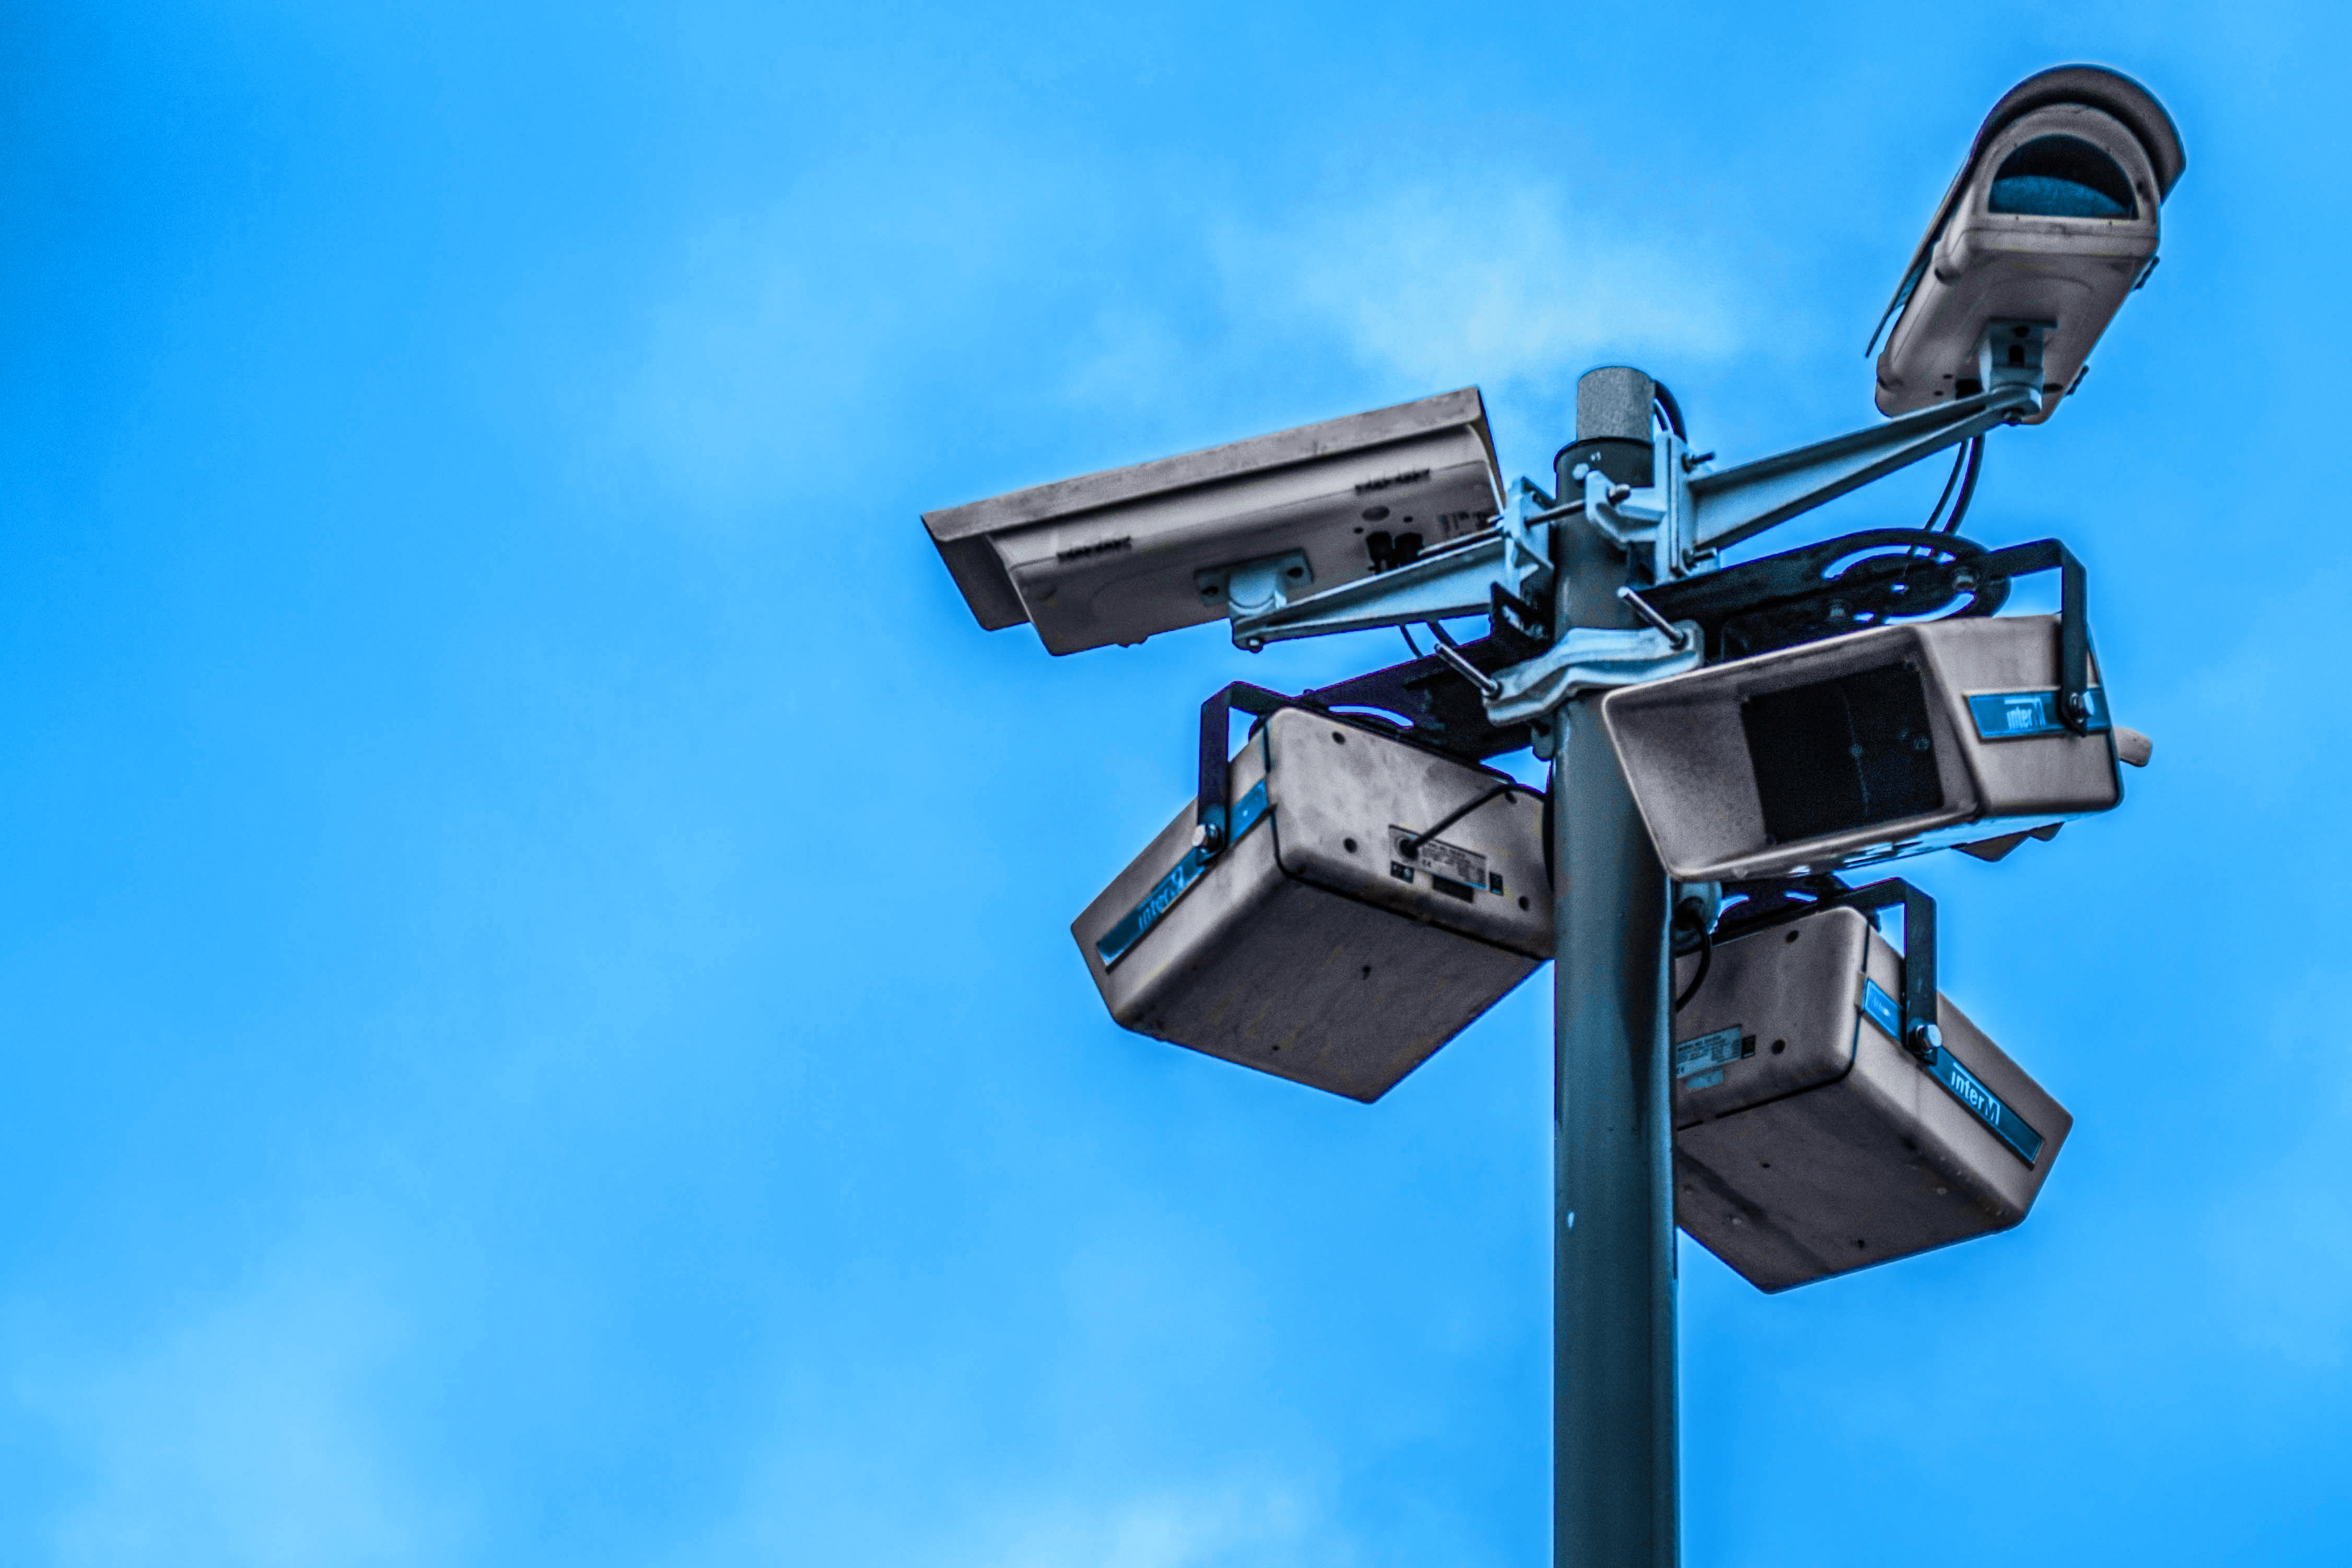 Securty cameras on a pole against a blue sky